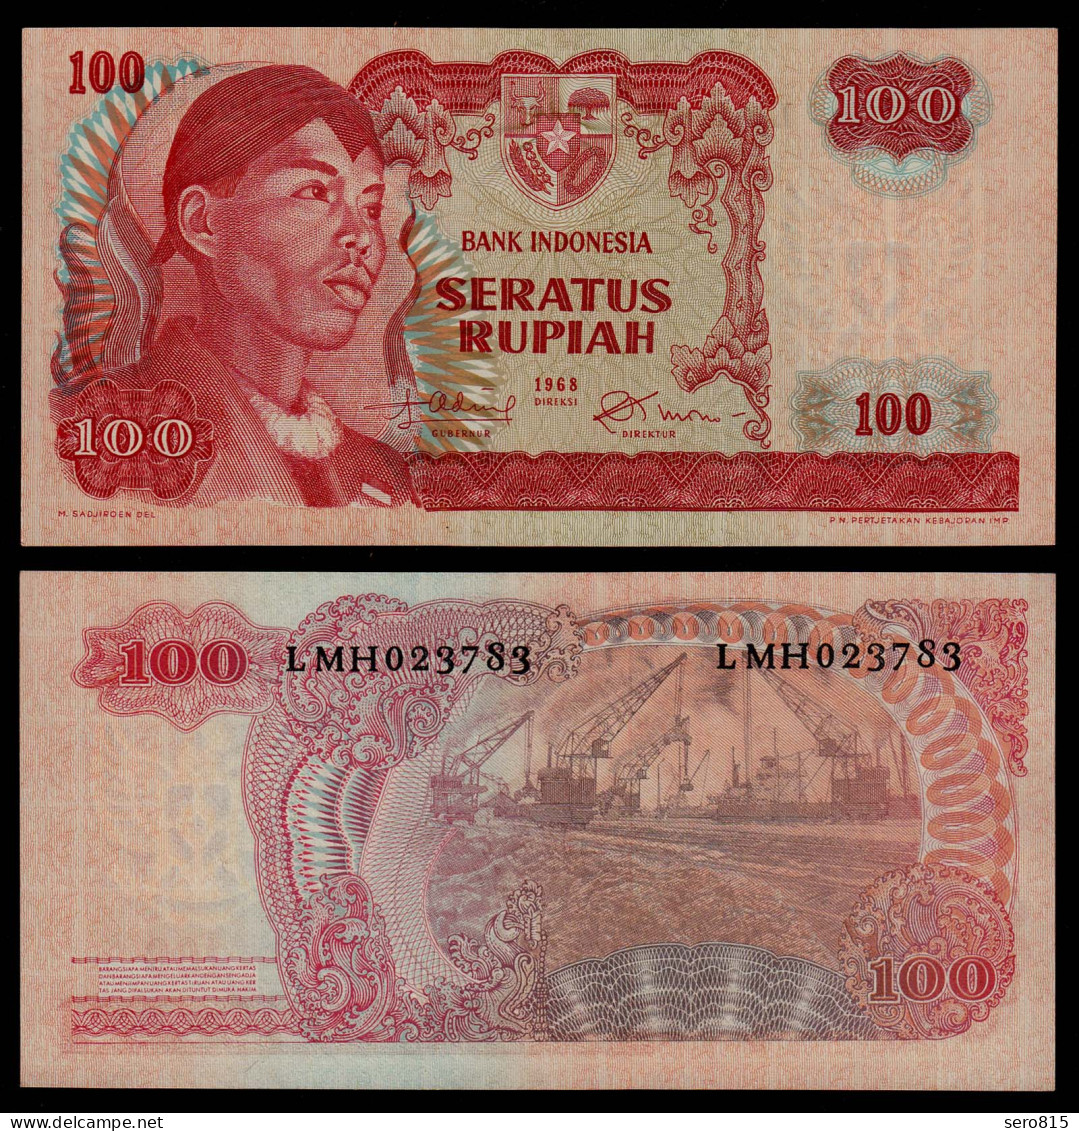 INDONESIEN - INDONESIA 100 RUPIAH Banknote 1968 Pick 108 XF (2)  (17914 - Autres - Asie